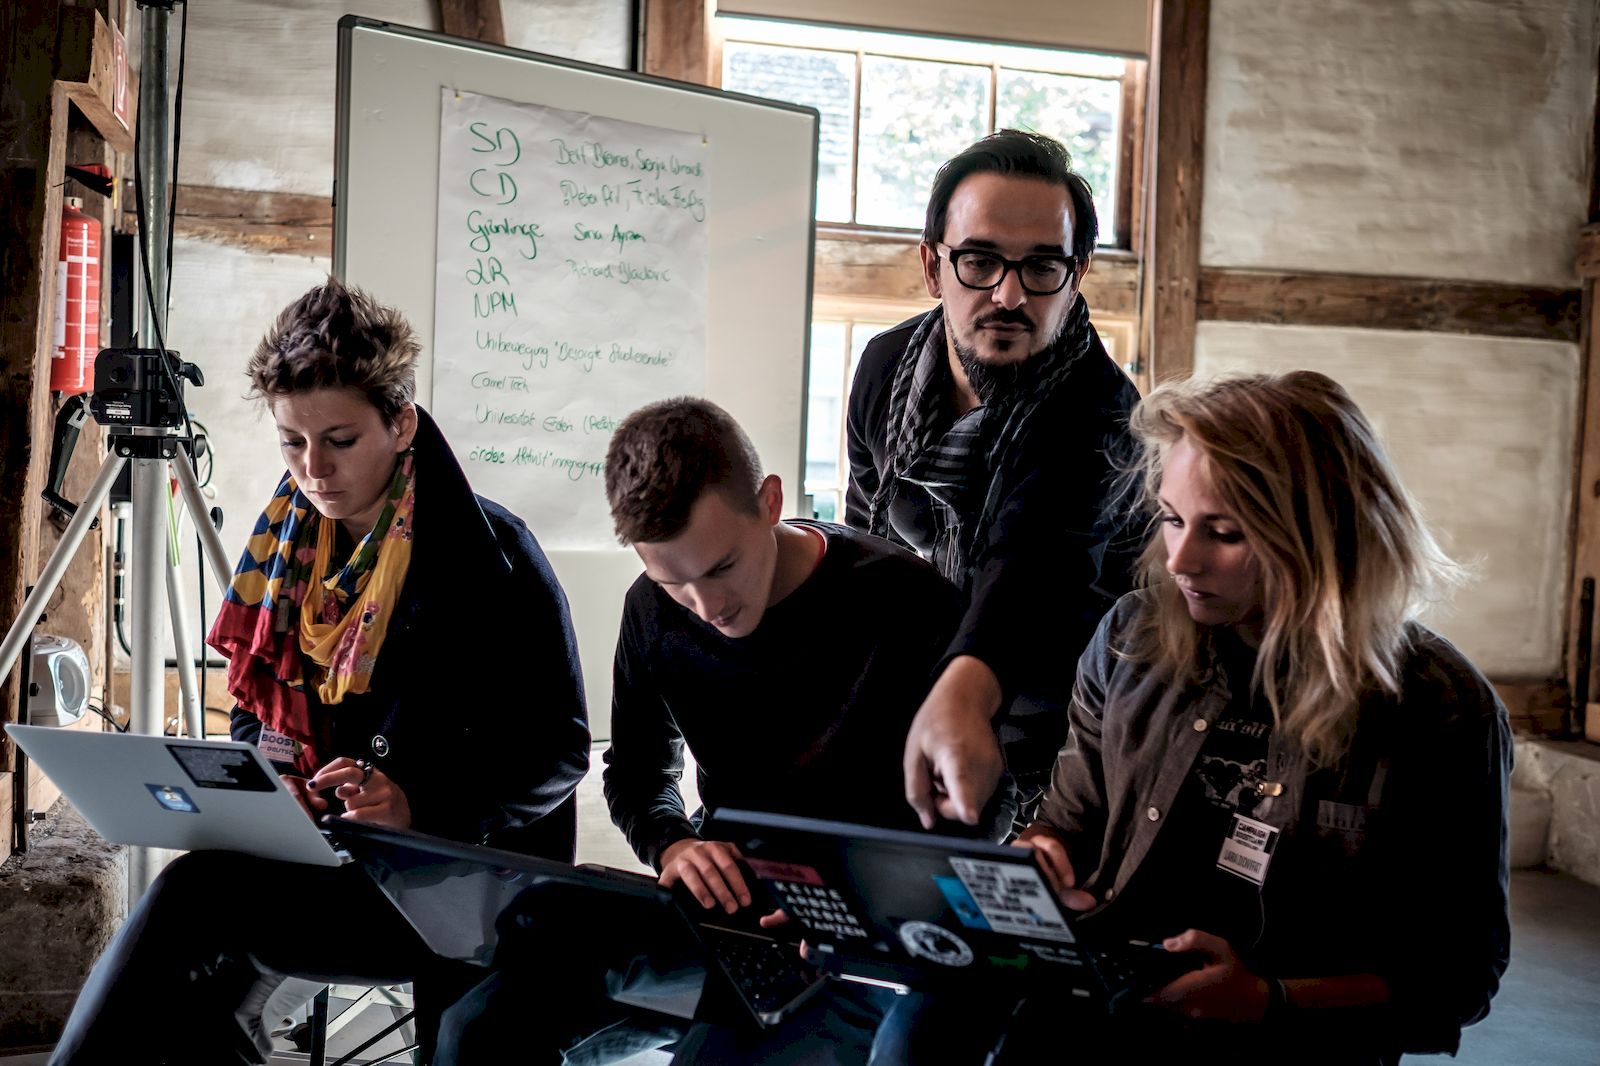 Campaign Boostcamp 2015 (Foto: Andi Weiland, www.andiweiland.de)